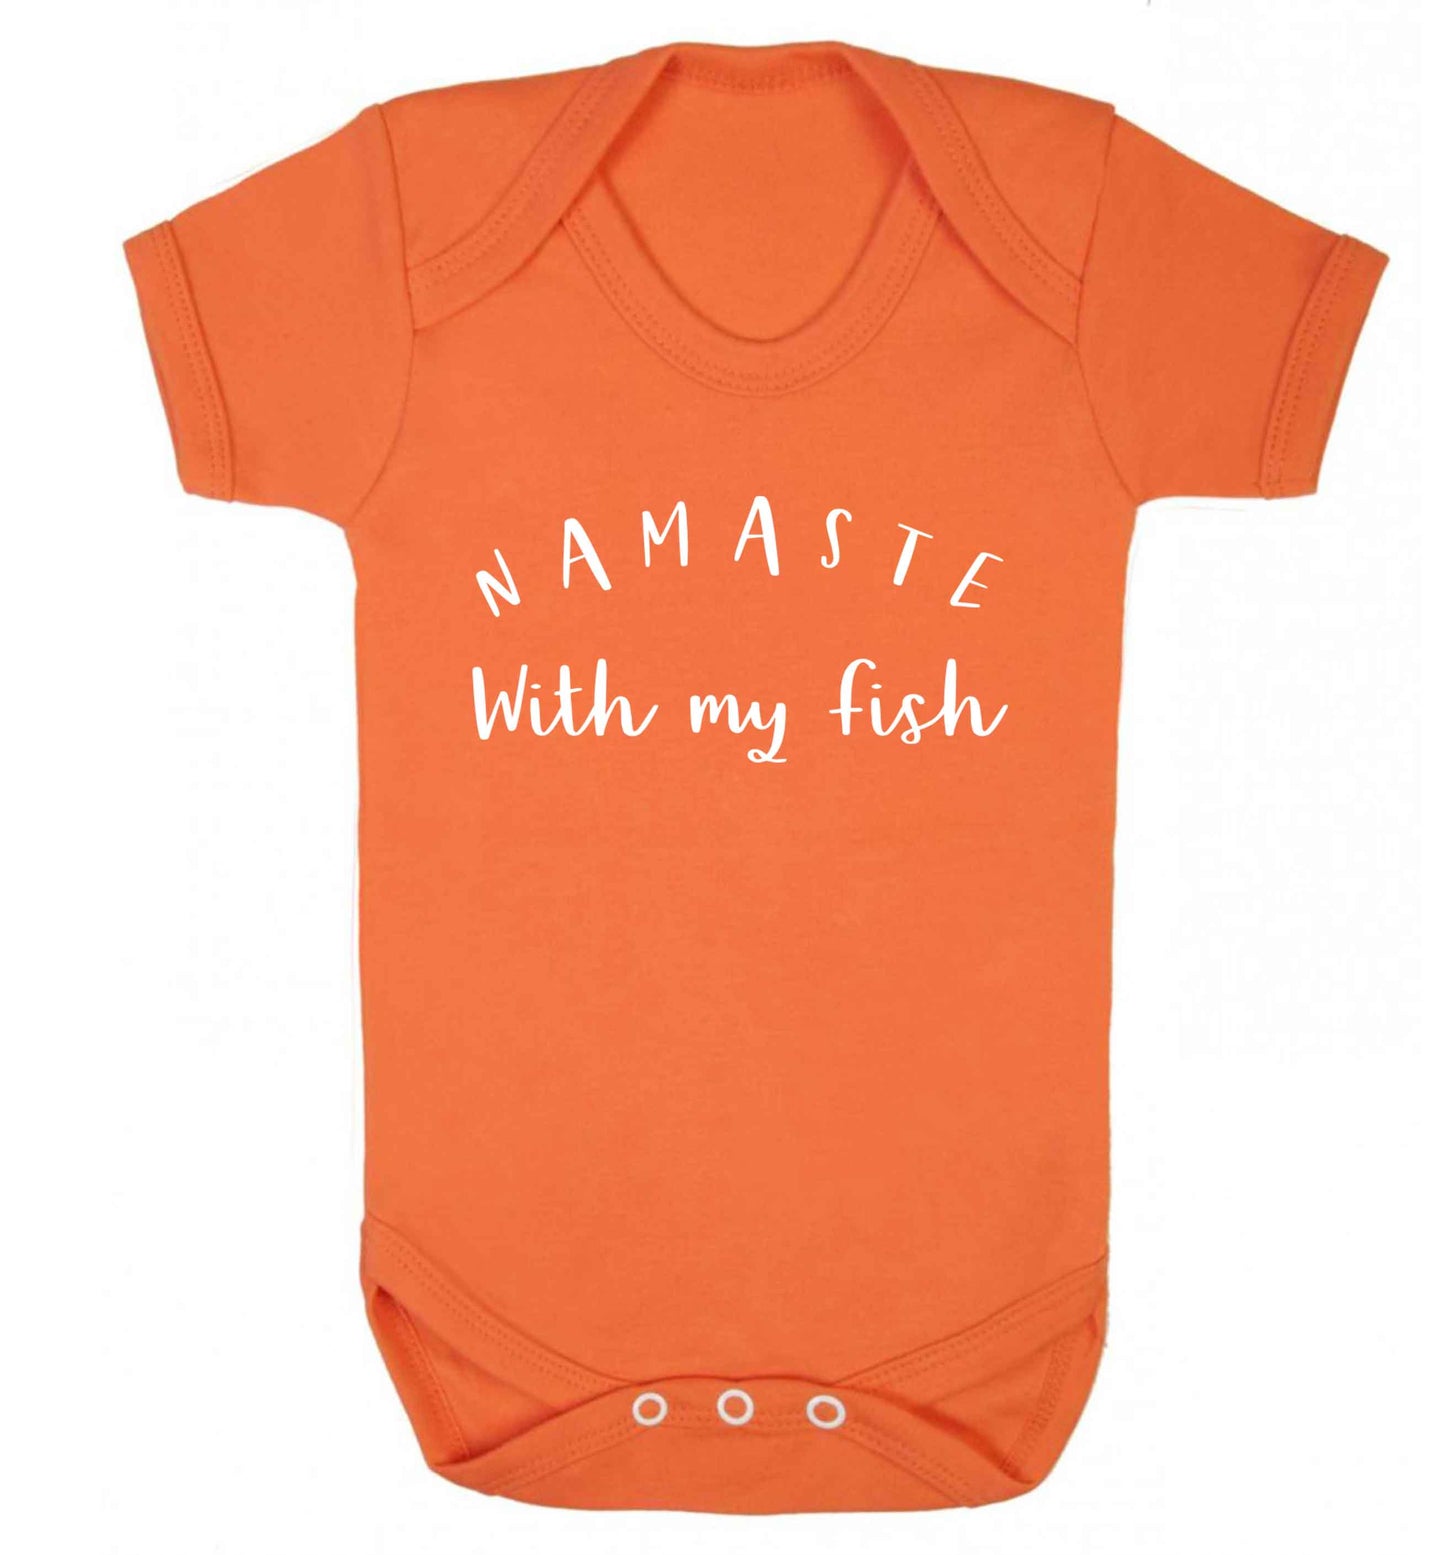 Namaste with my fish Baby Vest orange 18-24 months